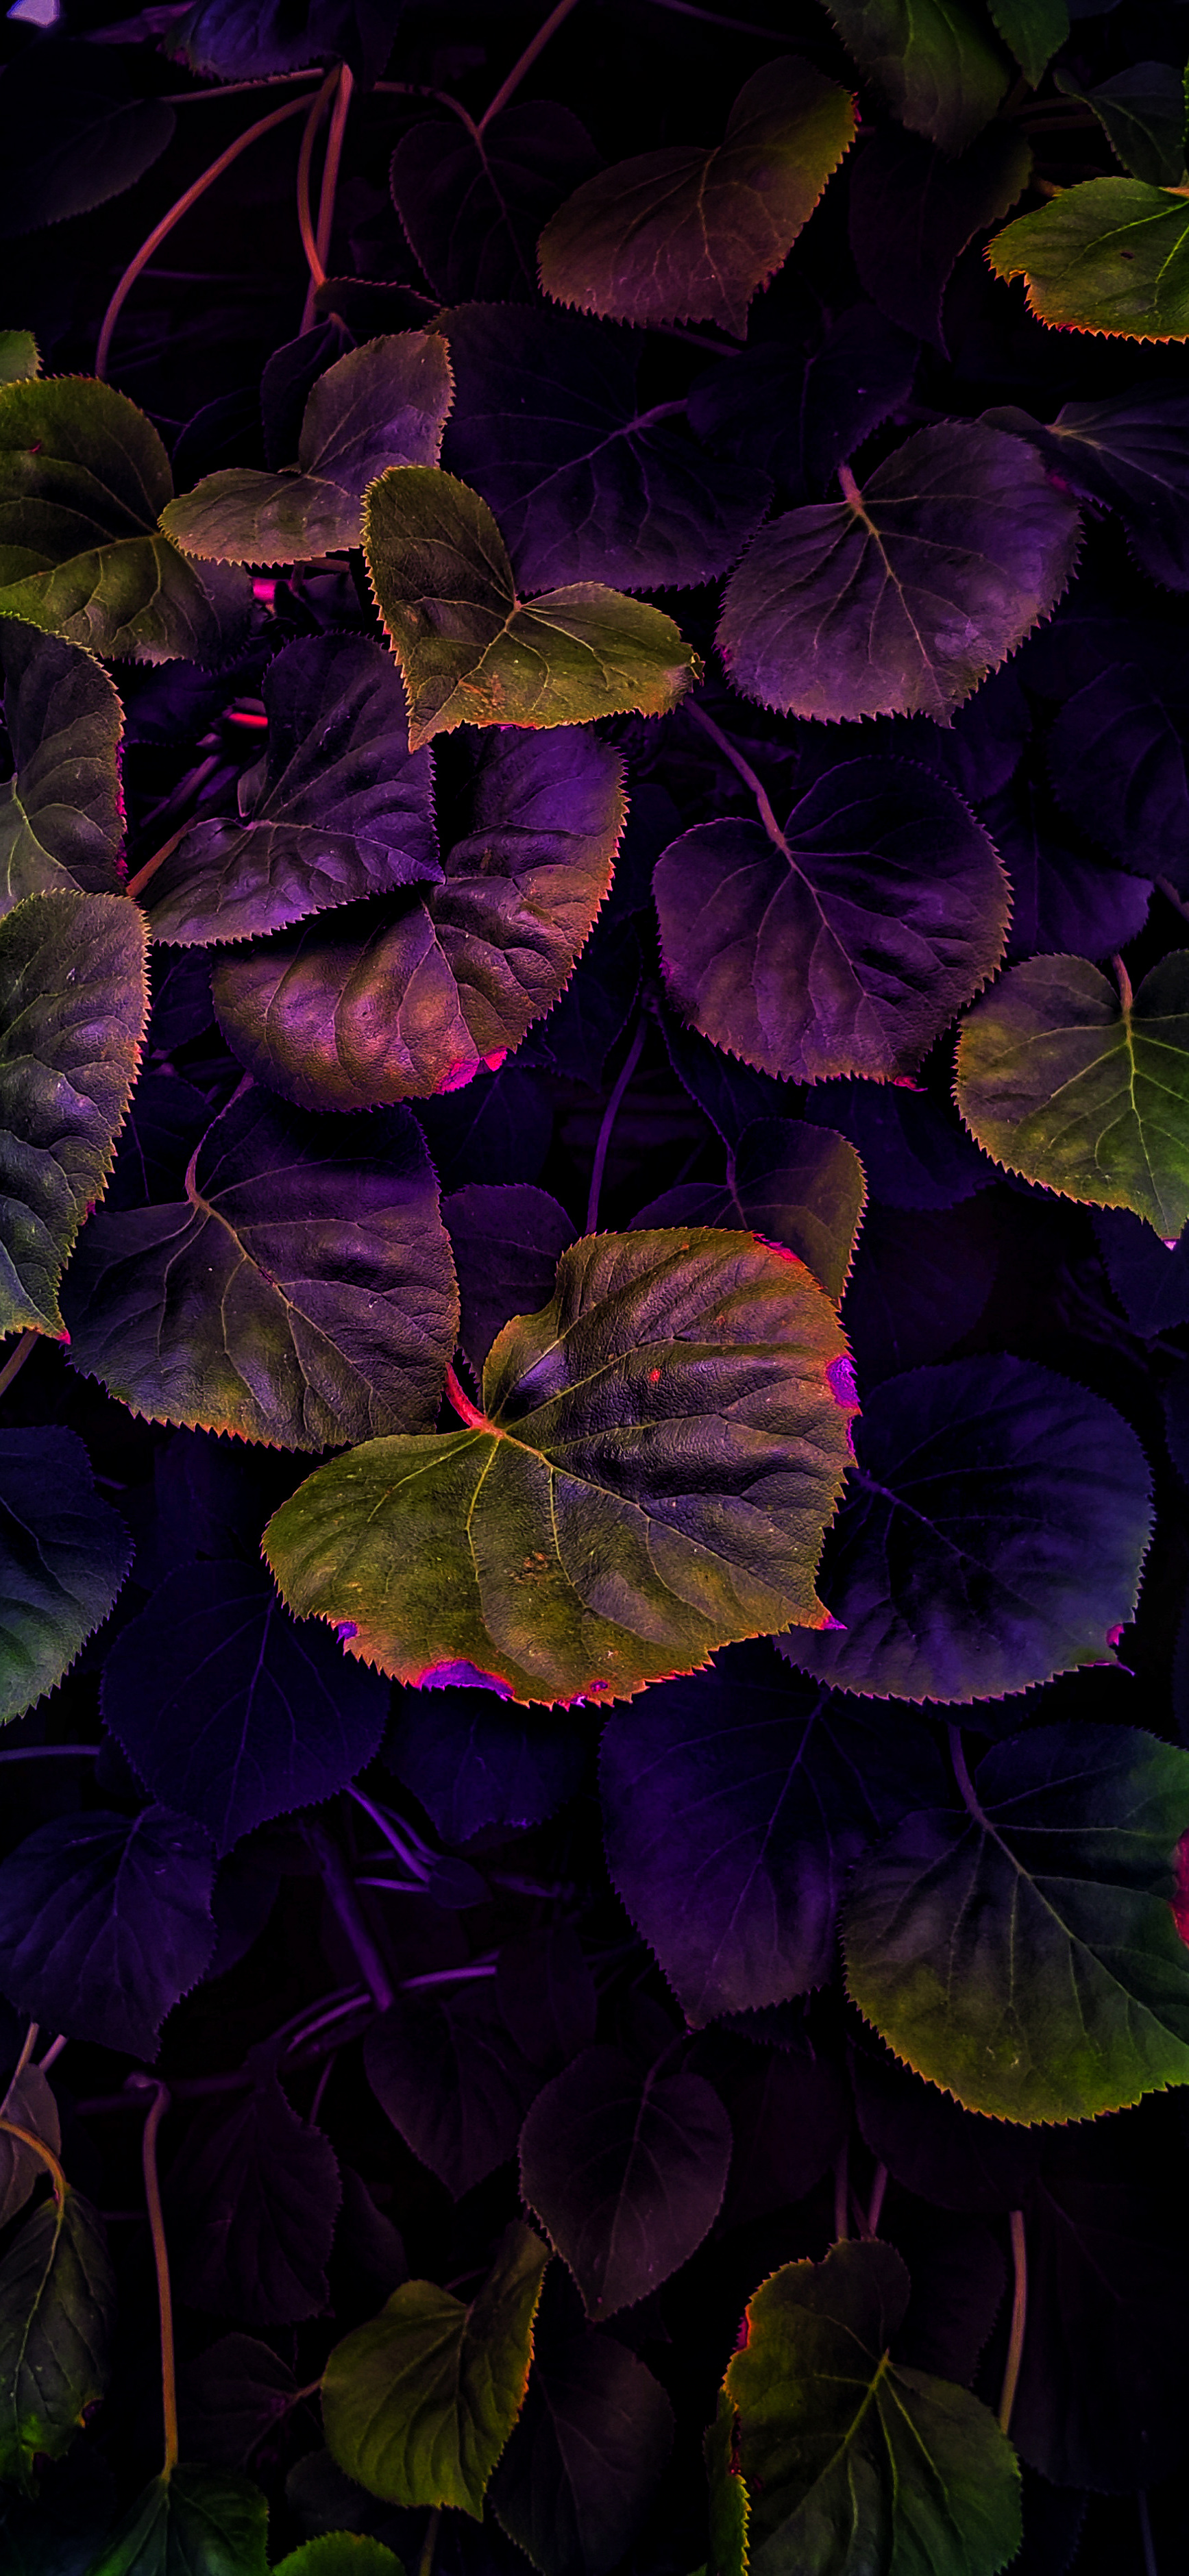 Nature photography iPhone wallpaper wallsbyjfl HDR purple